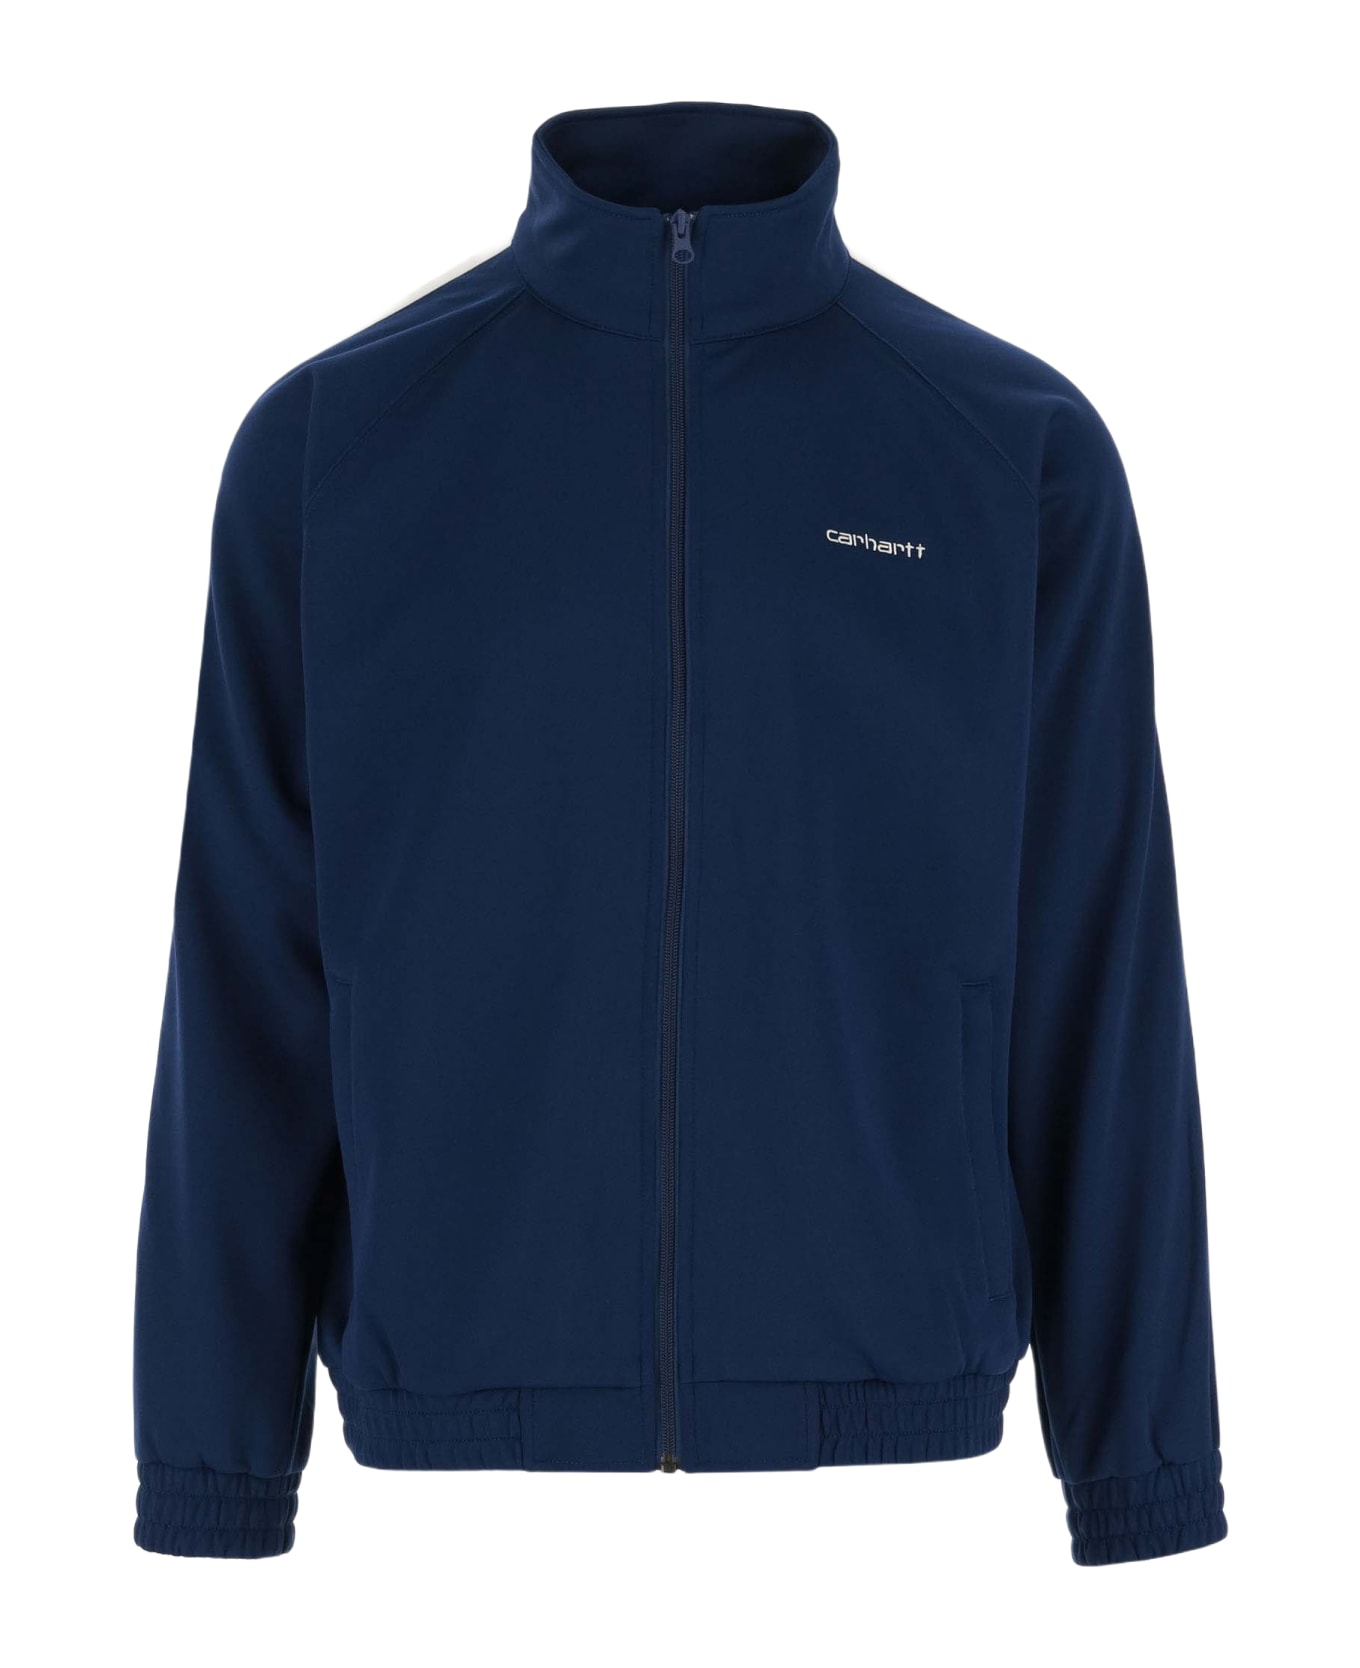 Carhartt Technical Fabric Sports Jacket - Blue